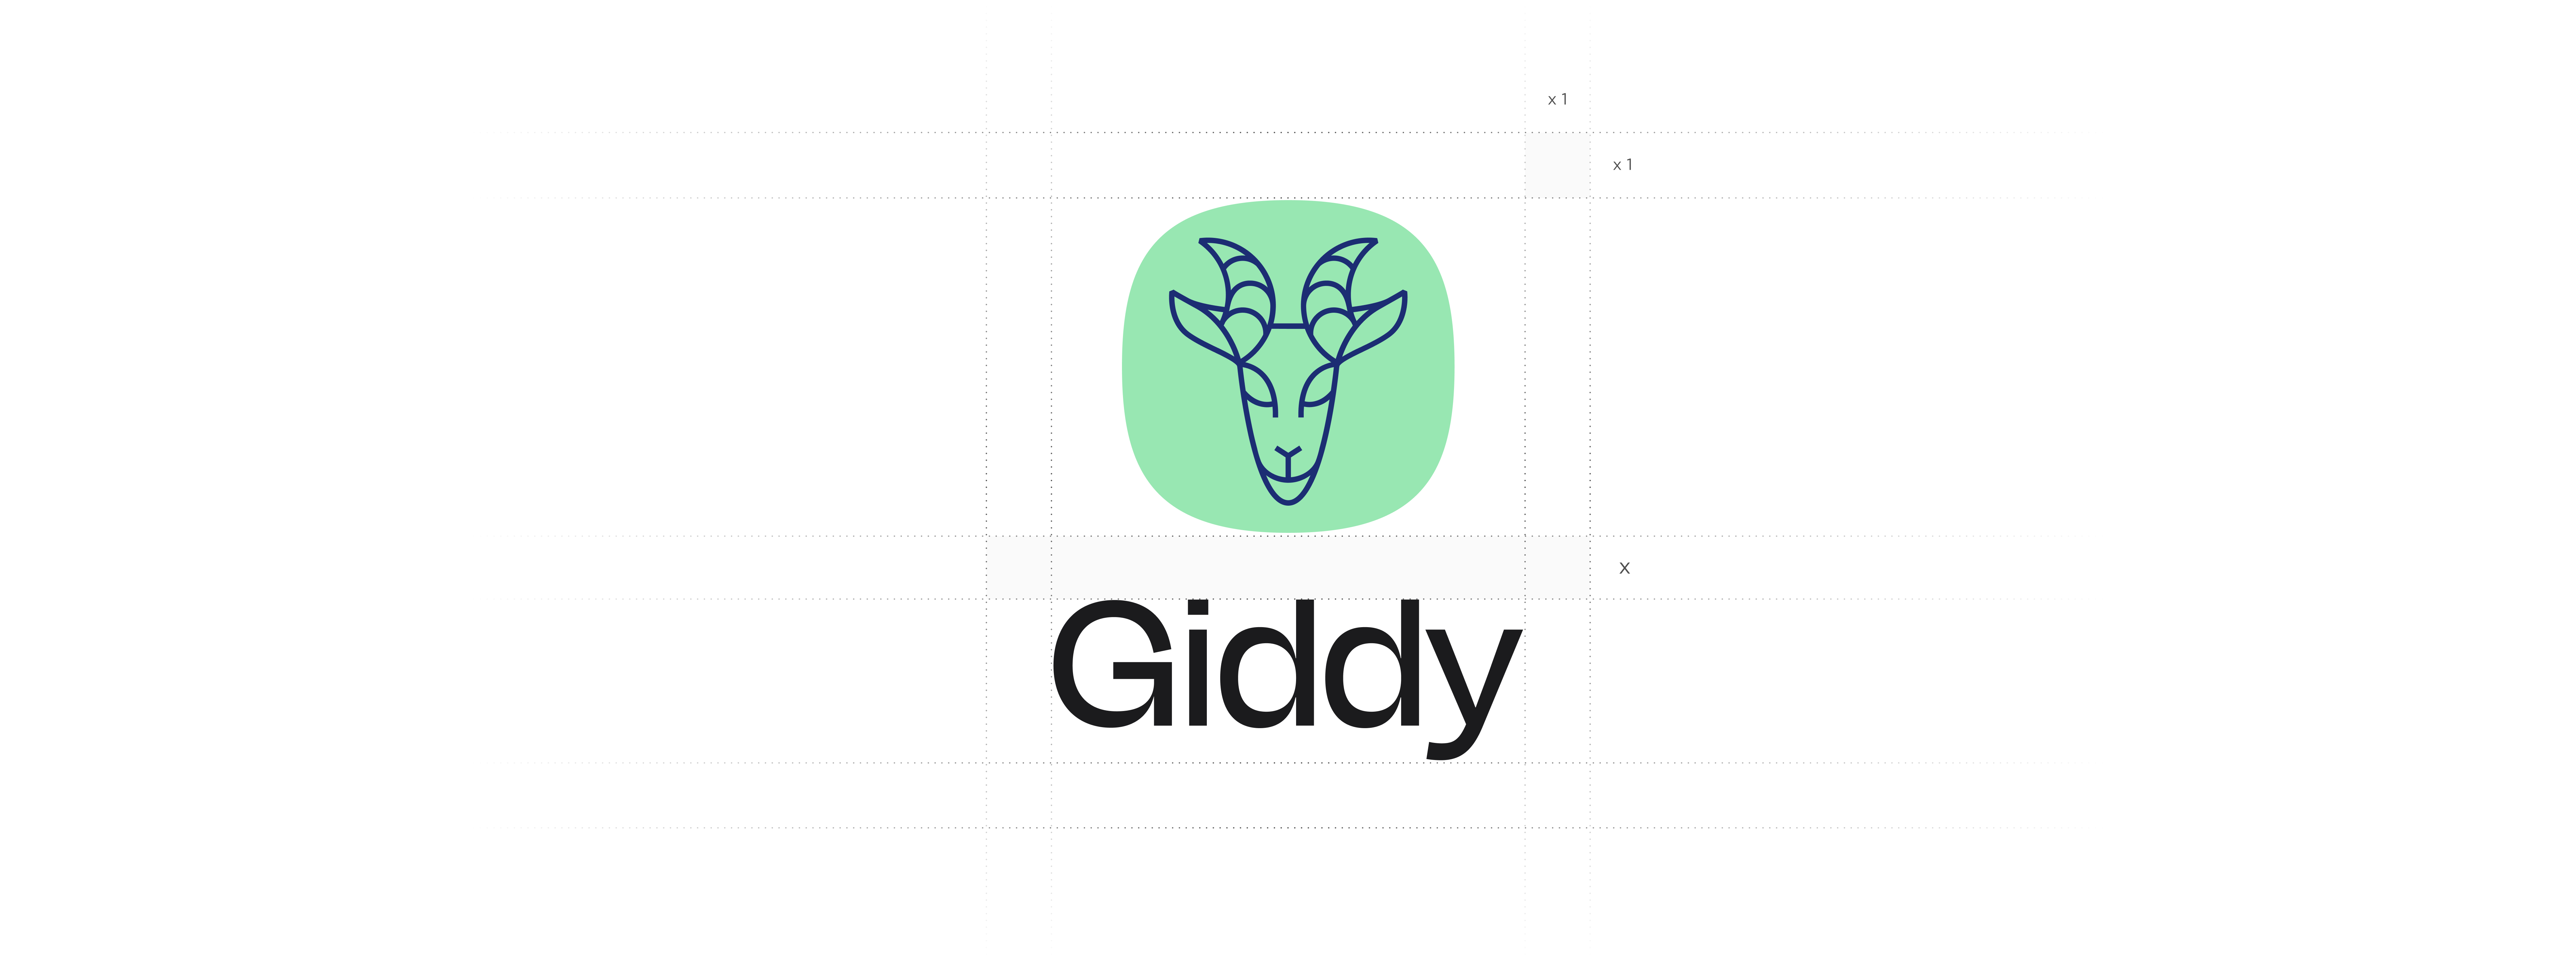 Giddy logo by Coletiv